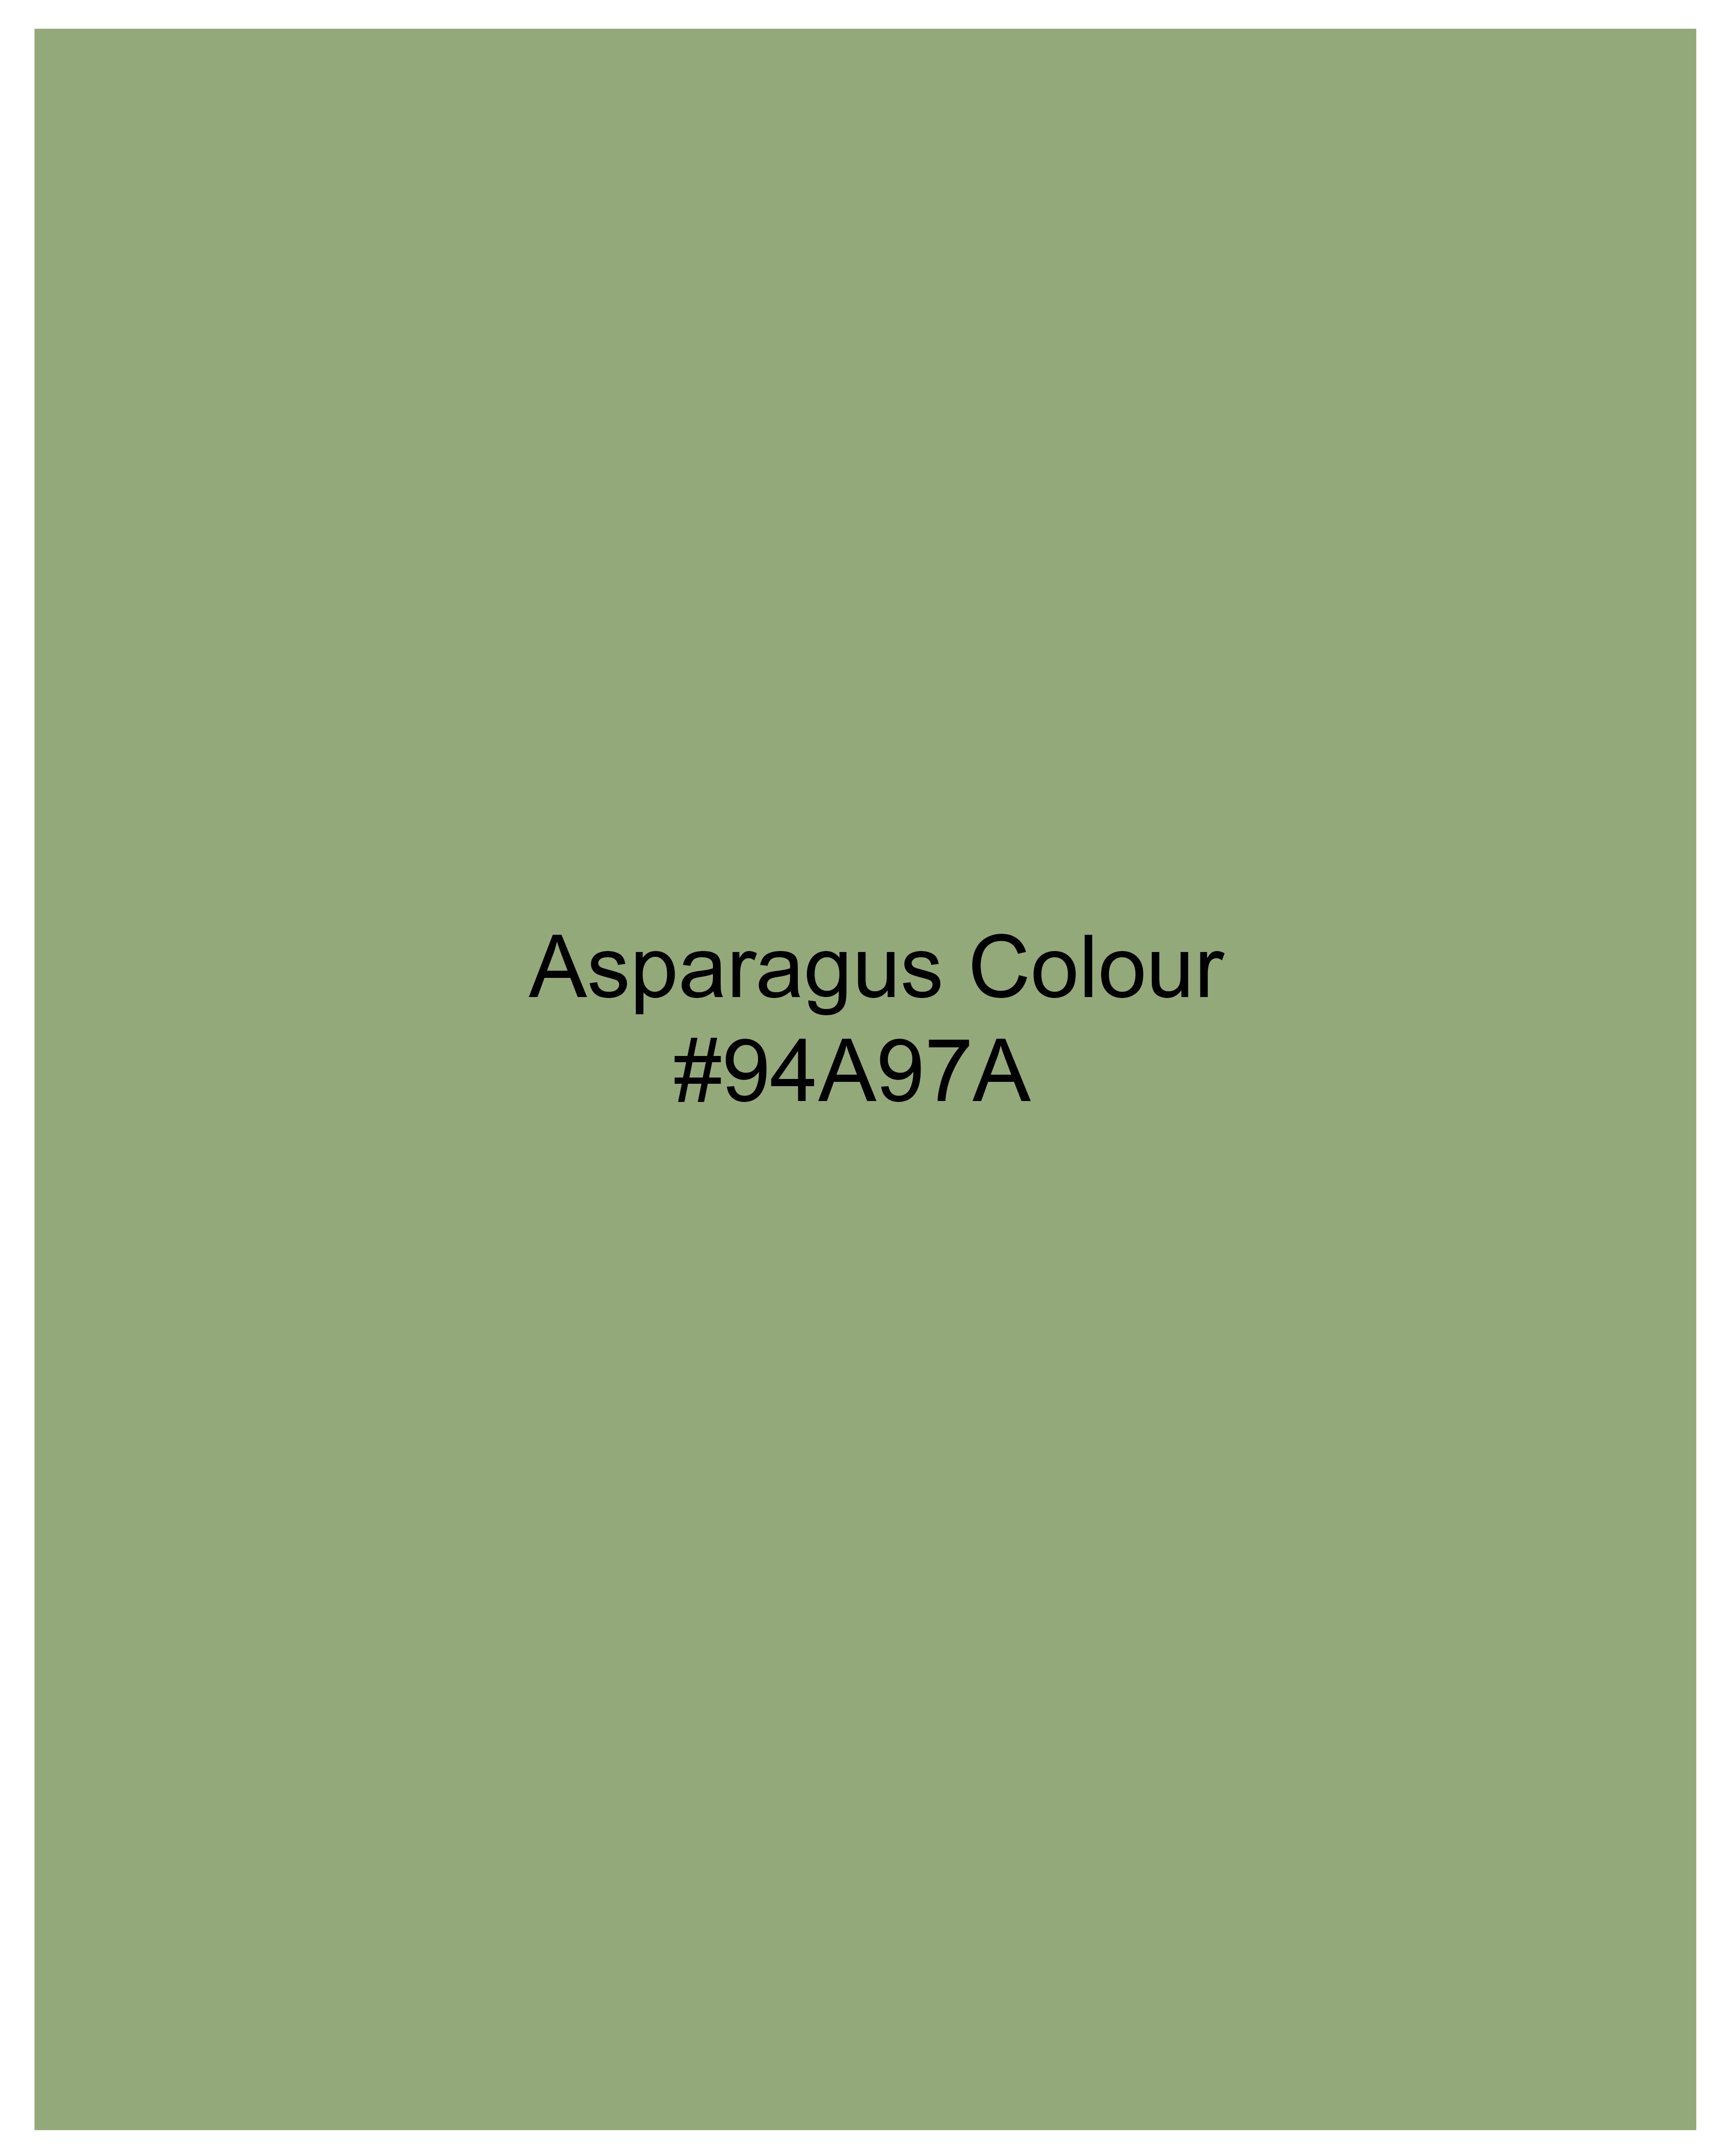 Asparagus Green Premium Cotton Crop Top WTP015-32, WTP015-34, WTP015-36, WTP015-38, WTP015-40, WTP015-42